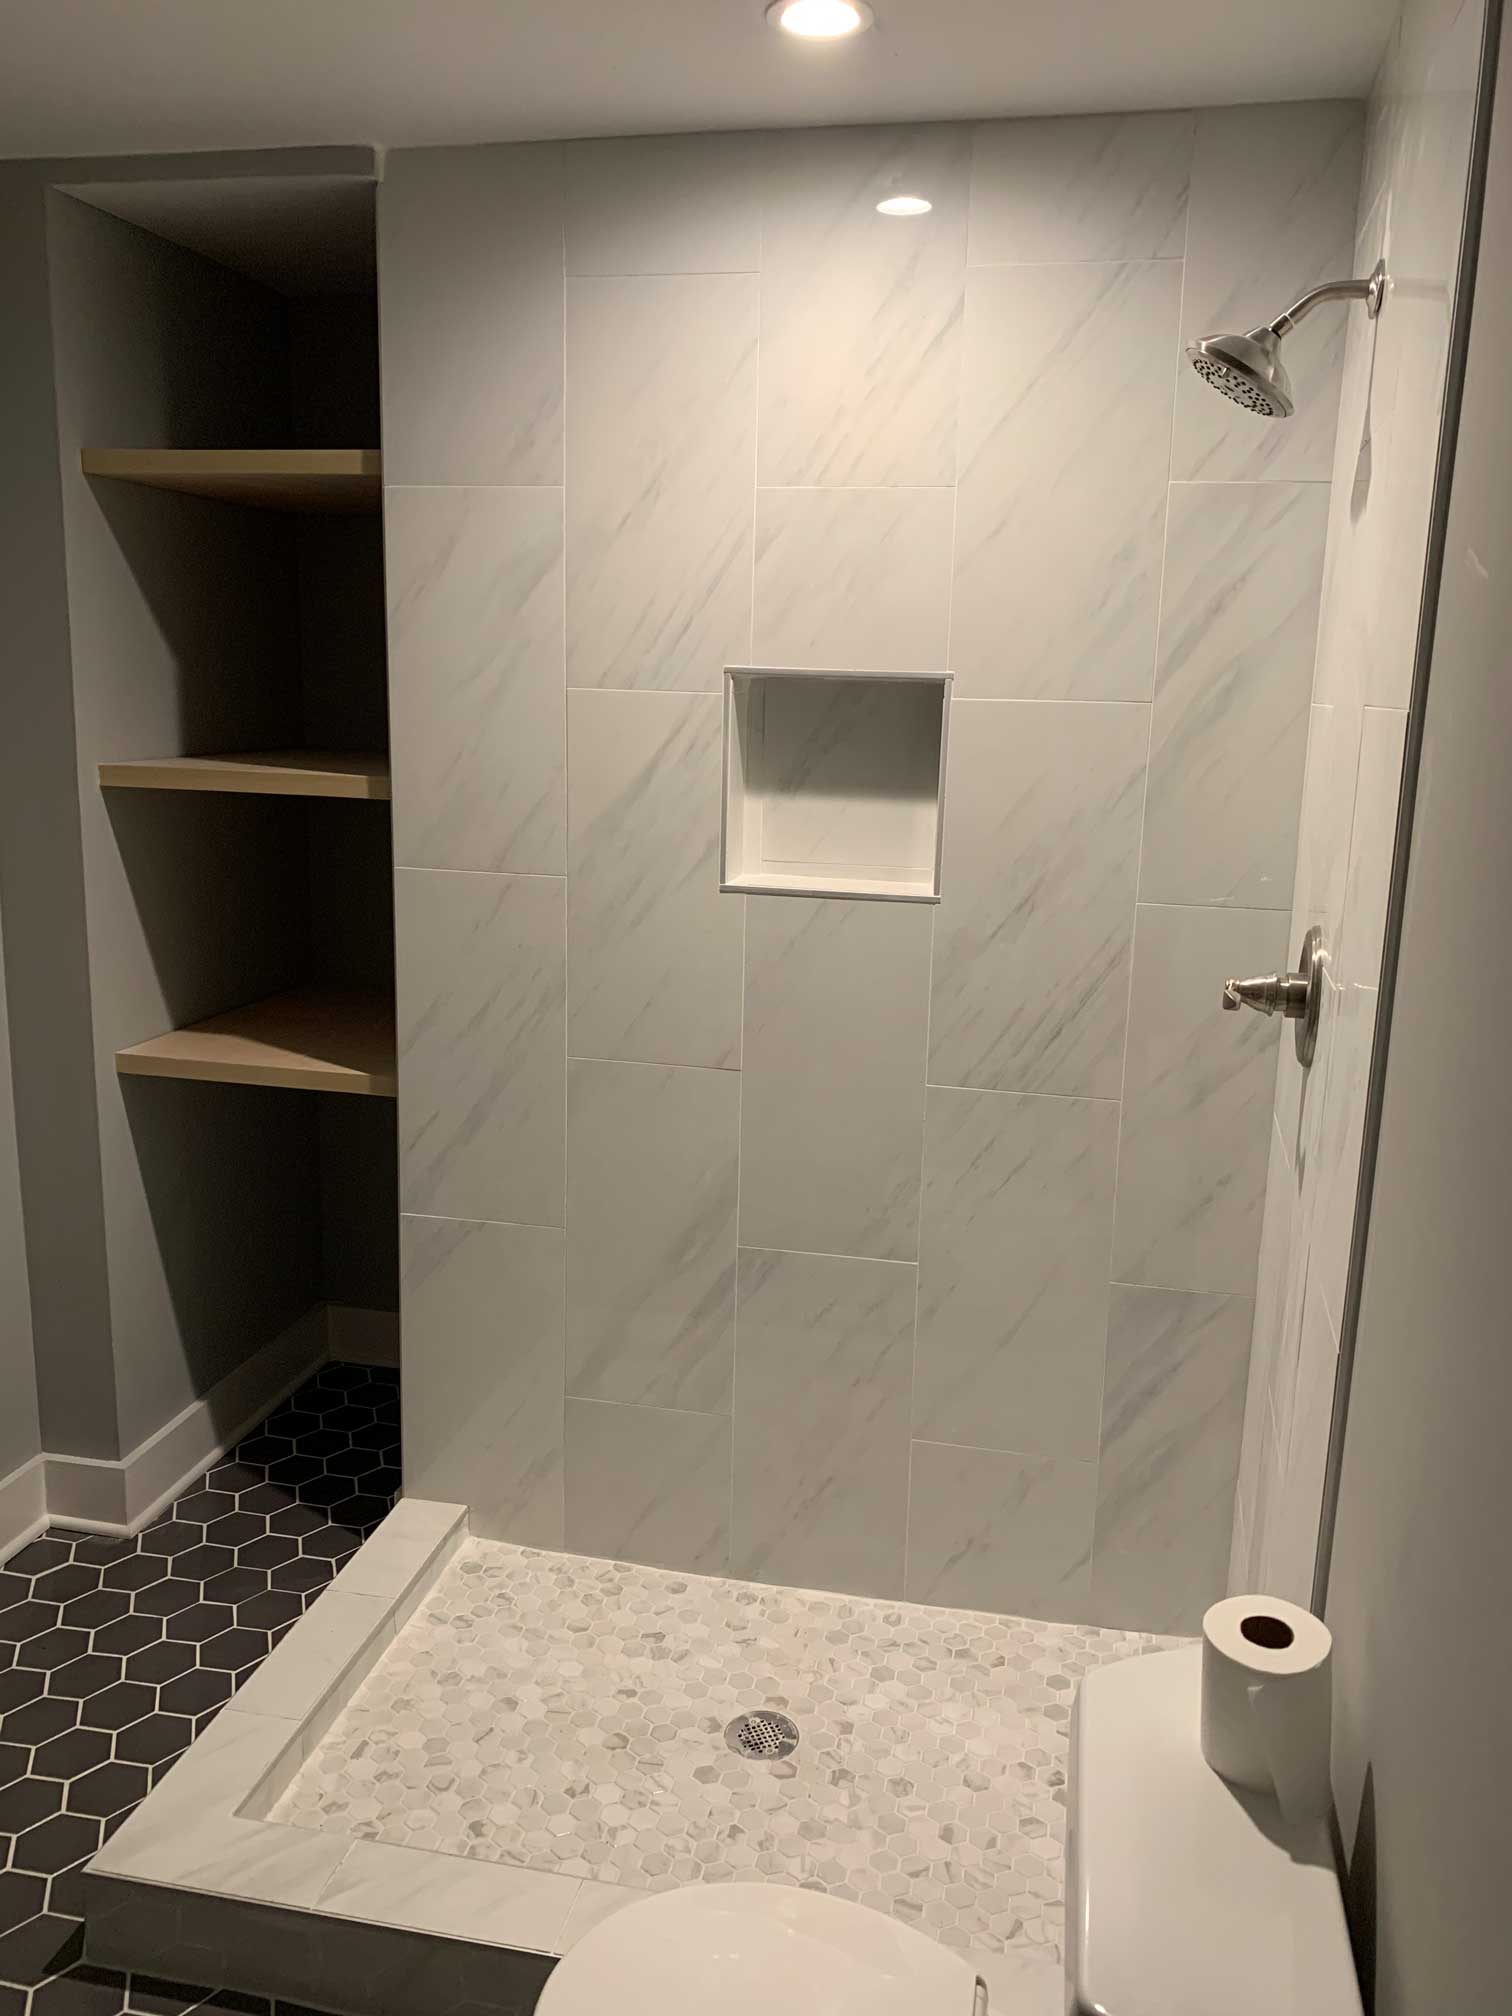 Shower remodel with custom tile